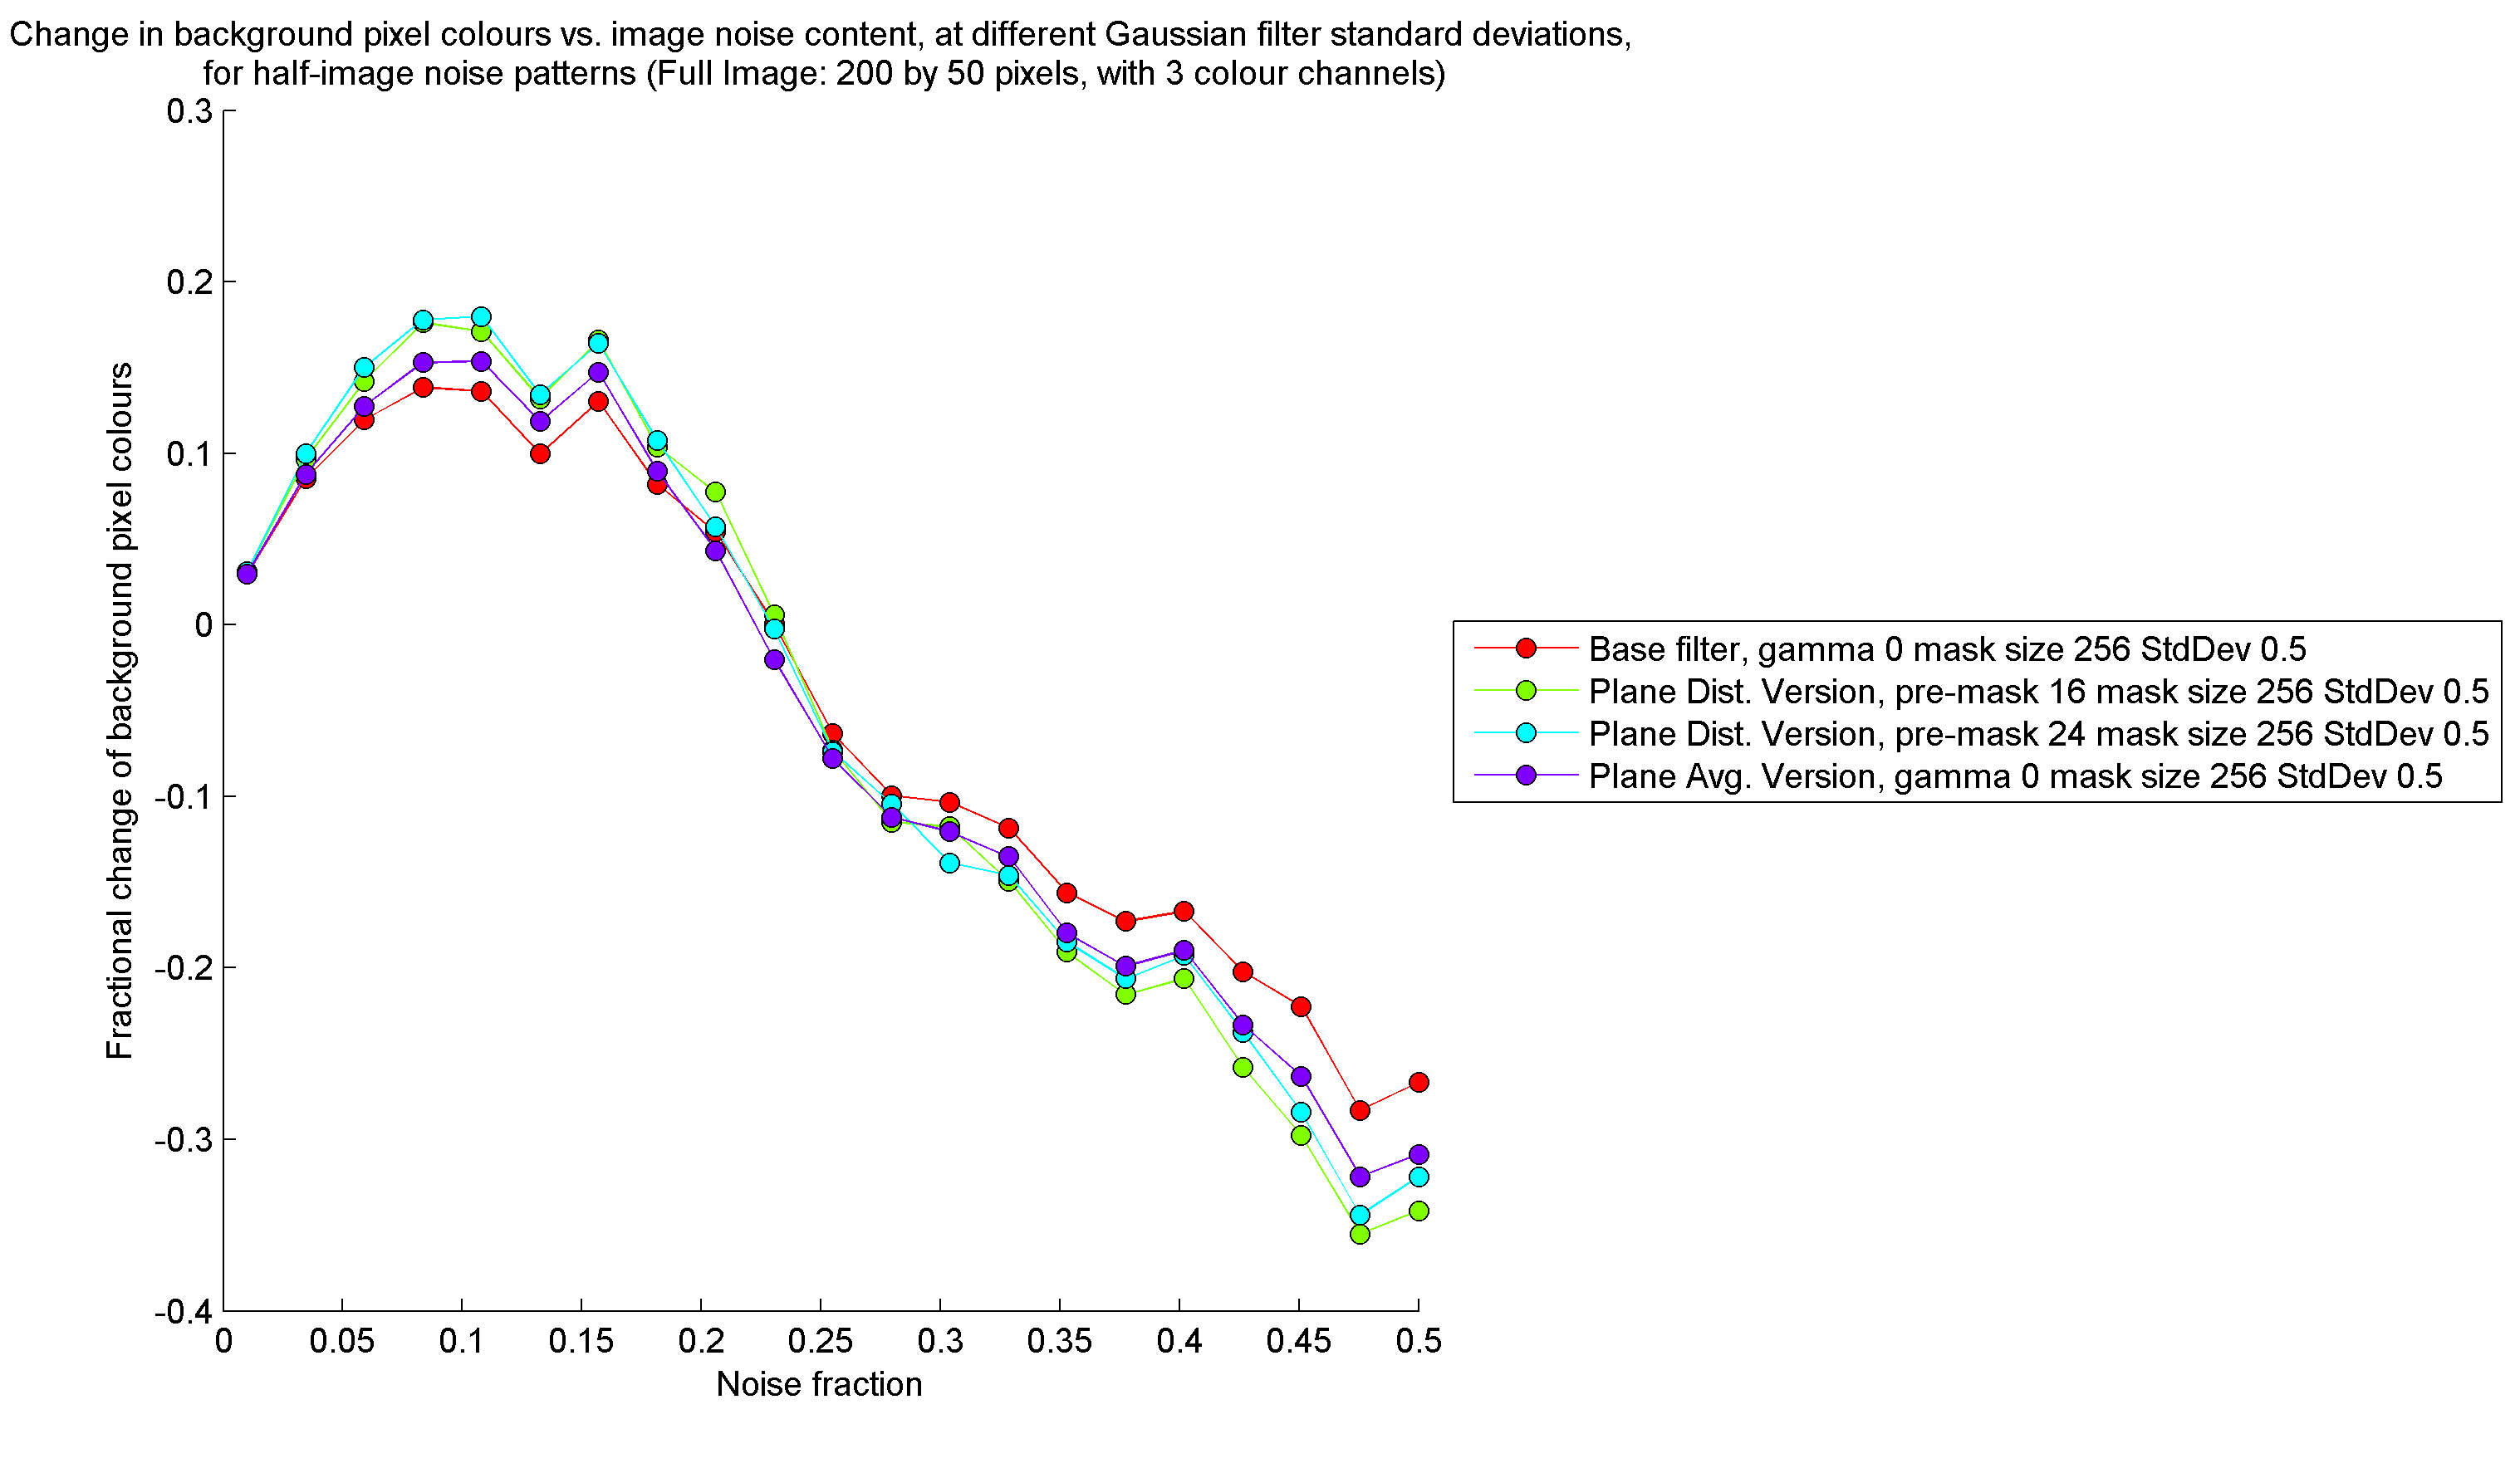 Background pixel contamination vs. noise fraction